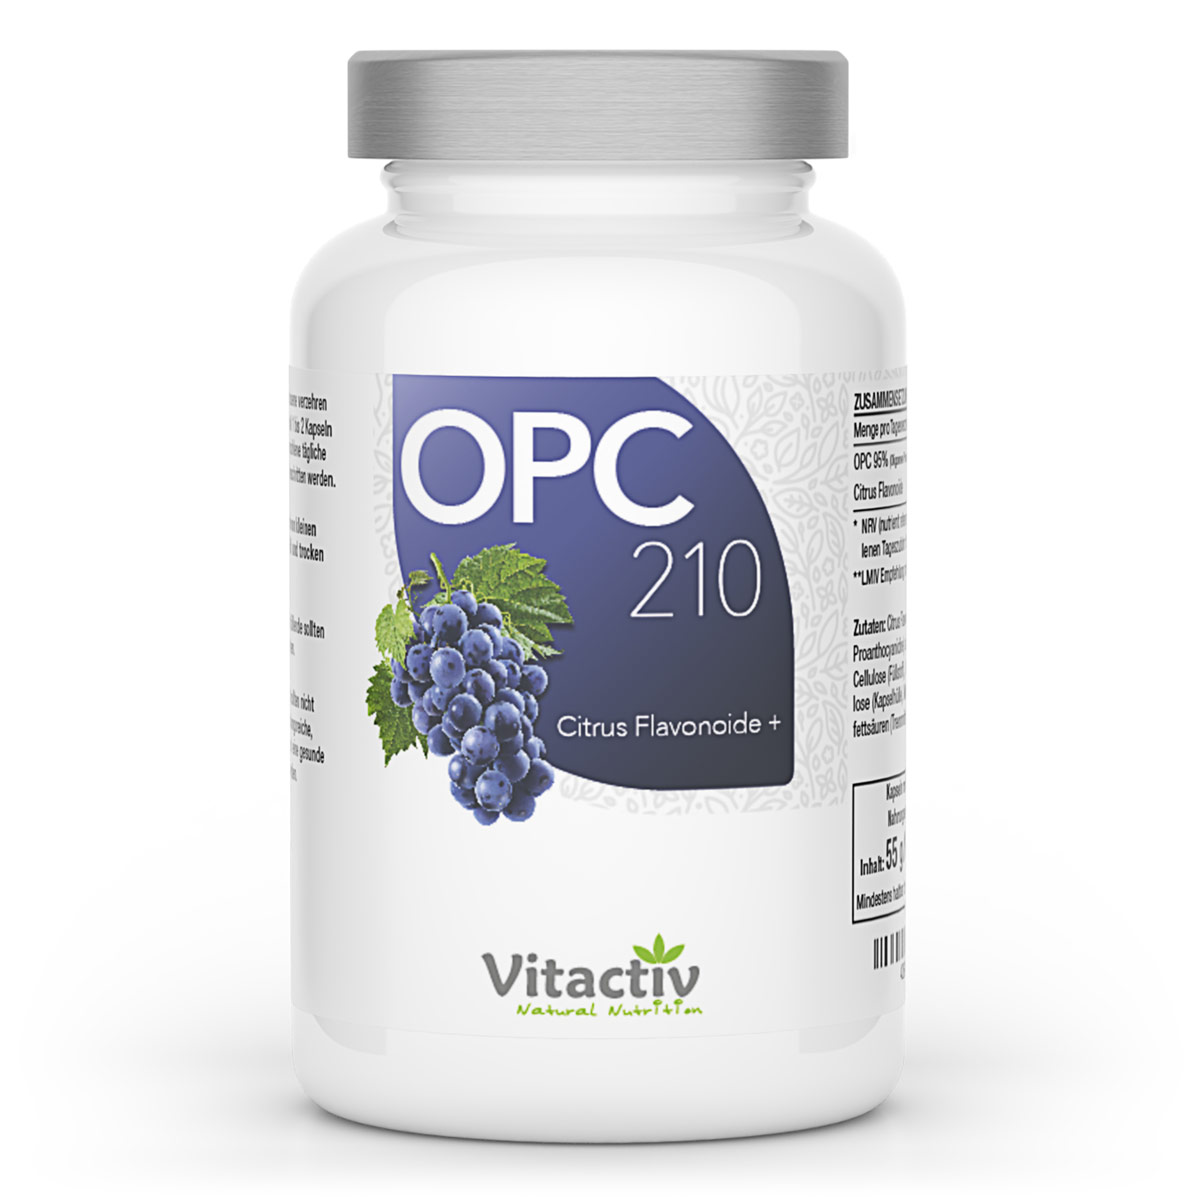 Vitamin b 50 complex - Die qualitativsten Vitamin b 50 complex im Überblick!